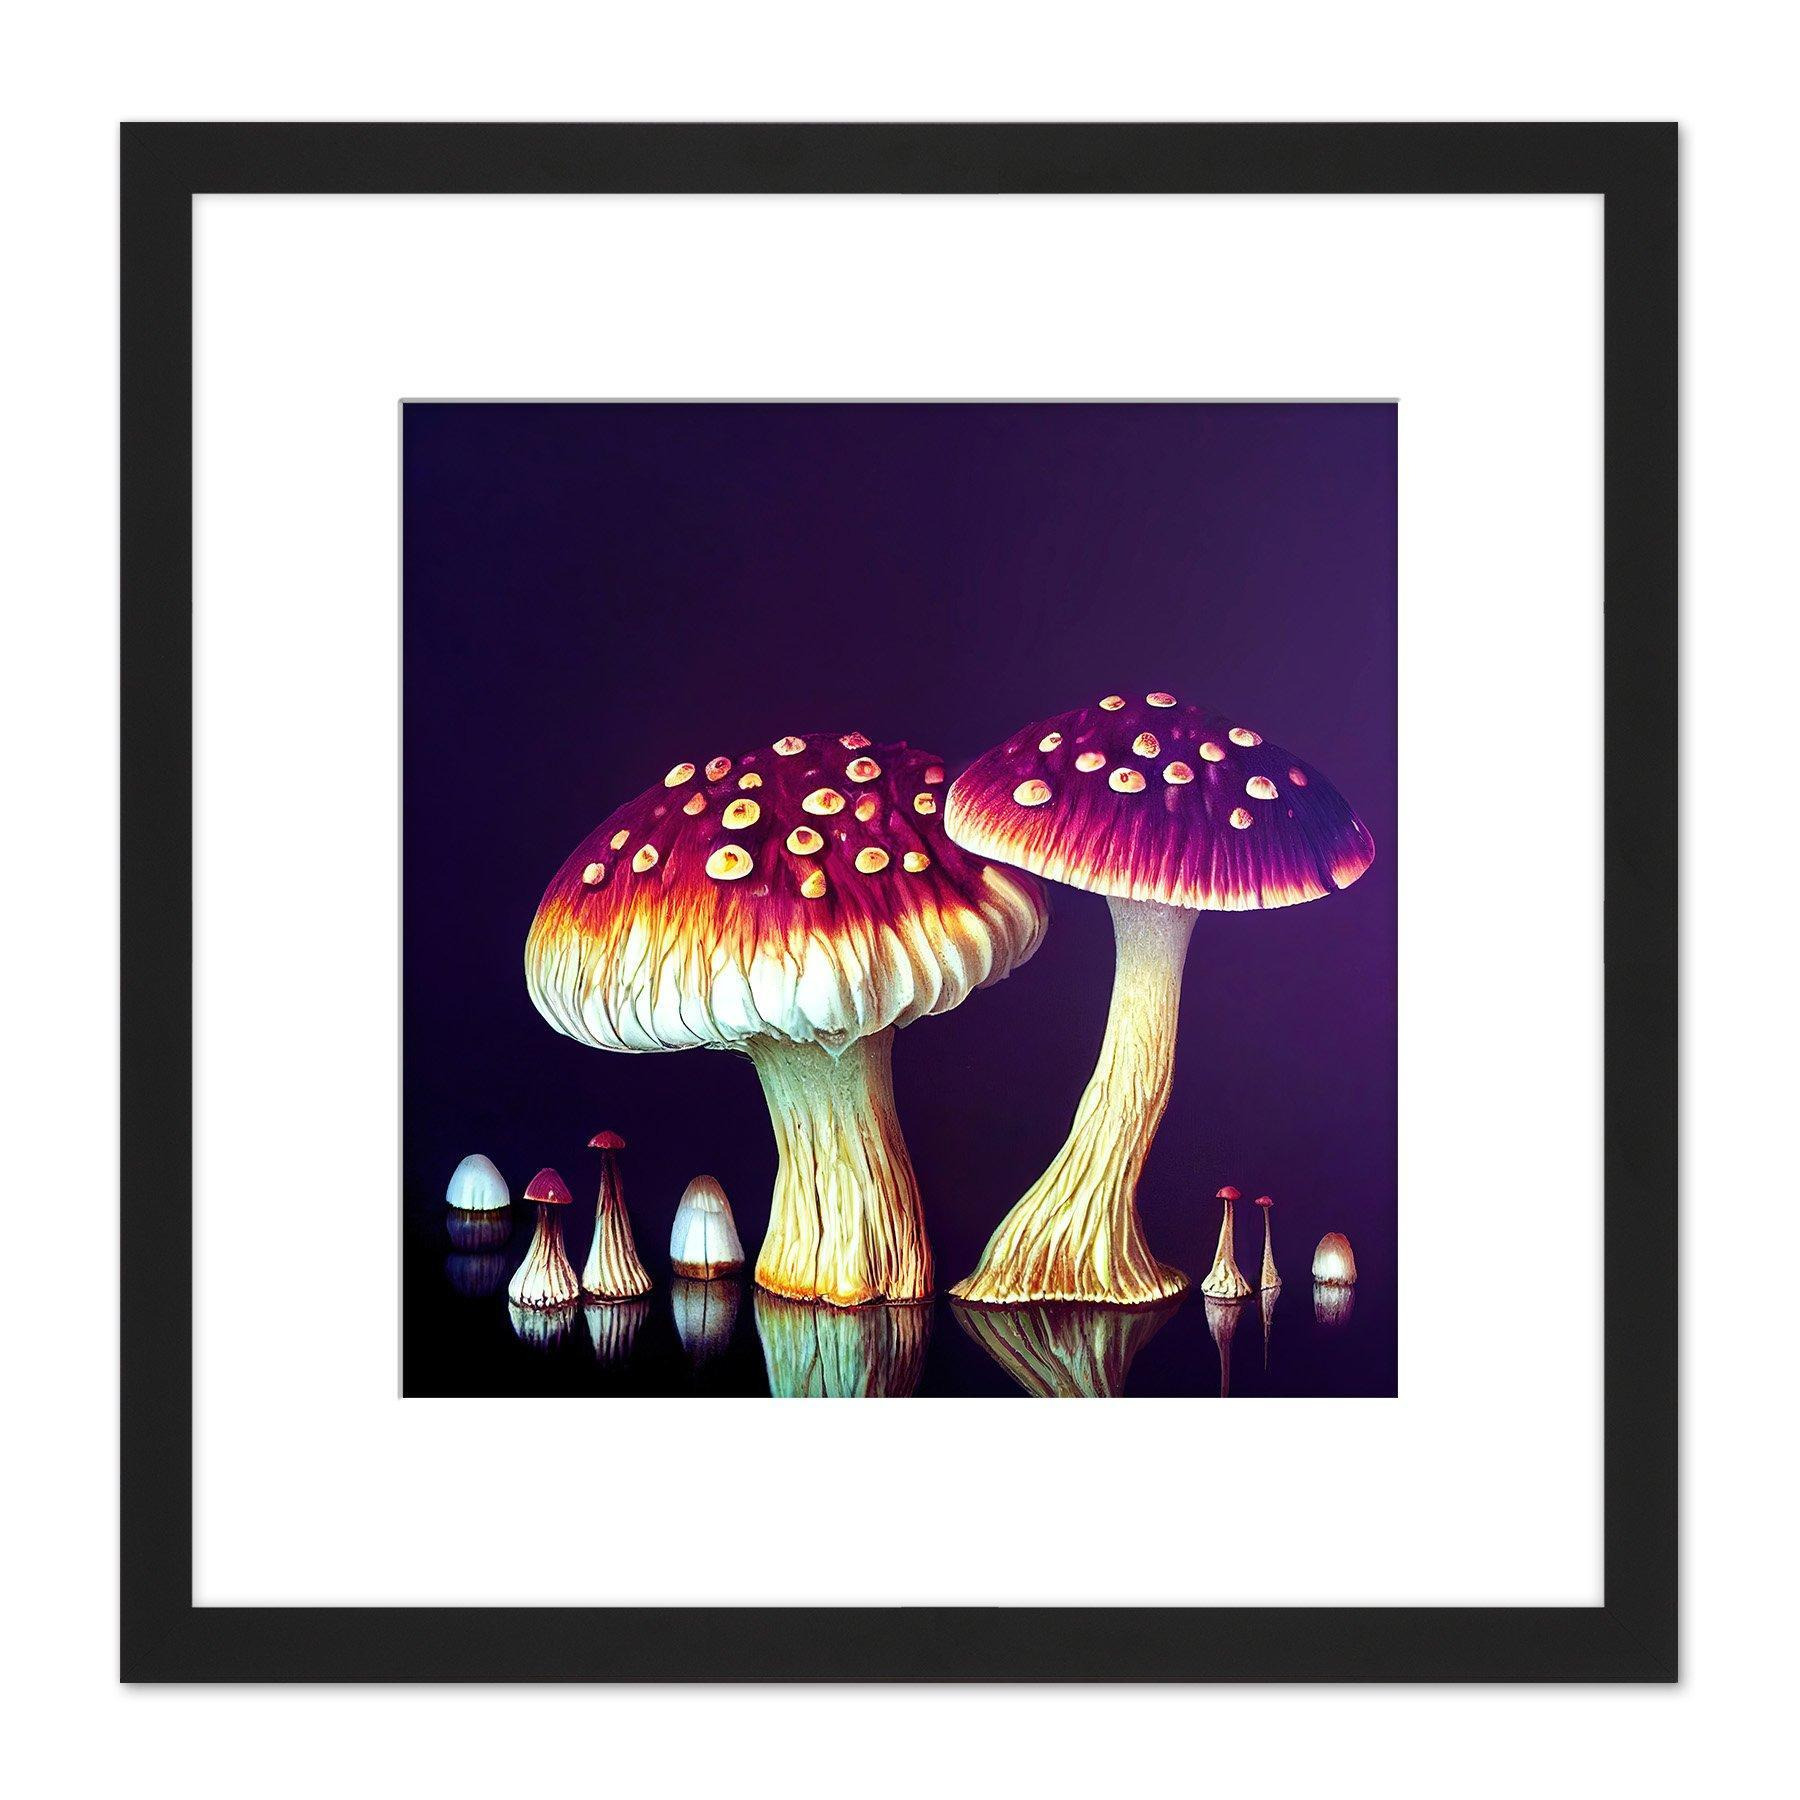 Mushroom Purple Yellow Fungi Study Illustration Square Wooden Framed Wall Art Print Picture 8X8 Inch - image 1